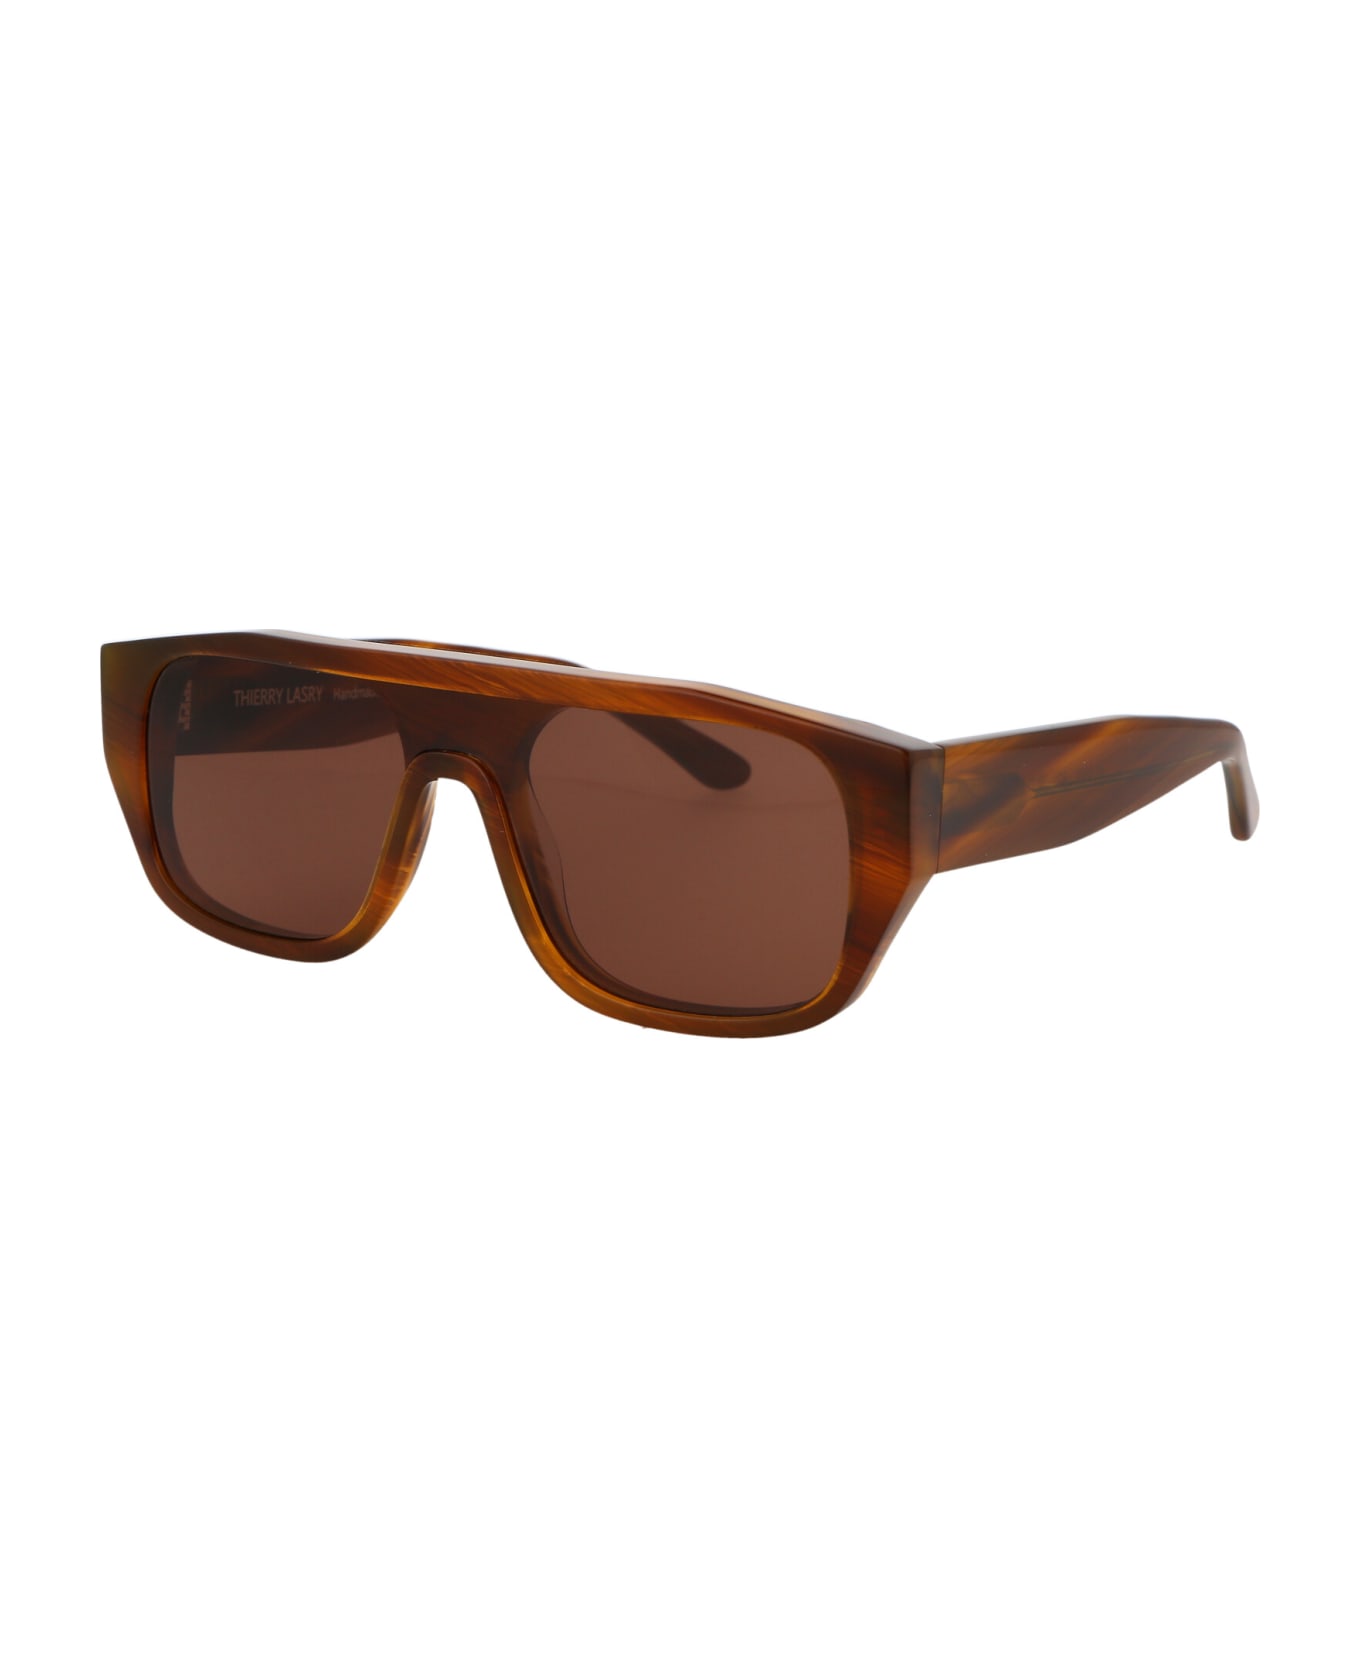 Thierry Lasry Klassy Sunglasses - 821 BROWN サングラス